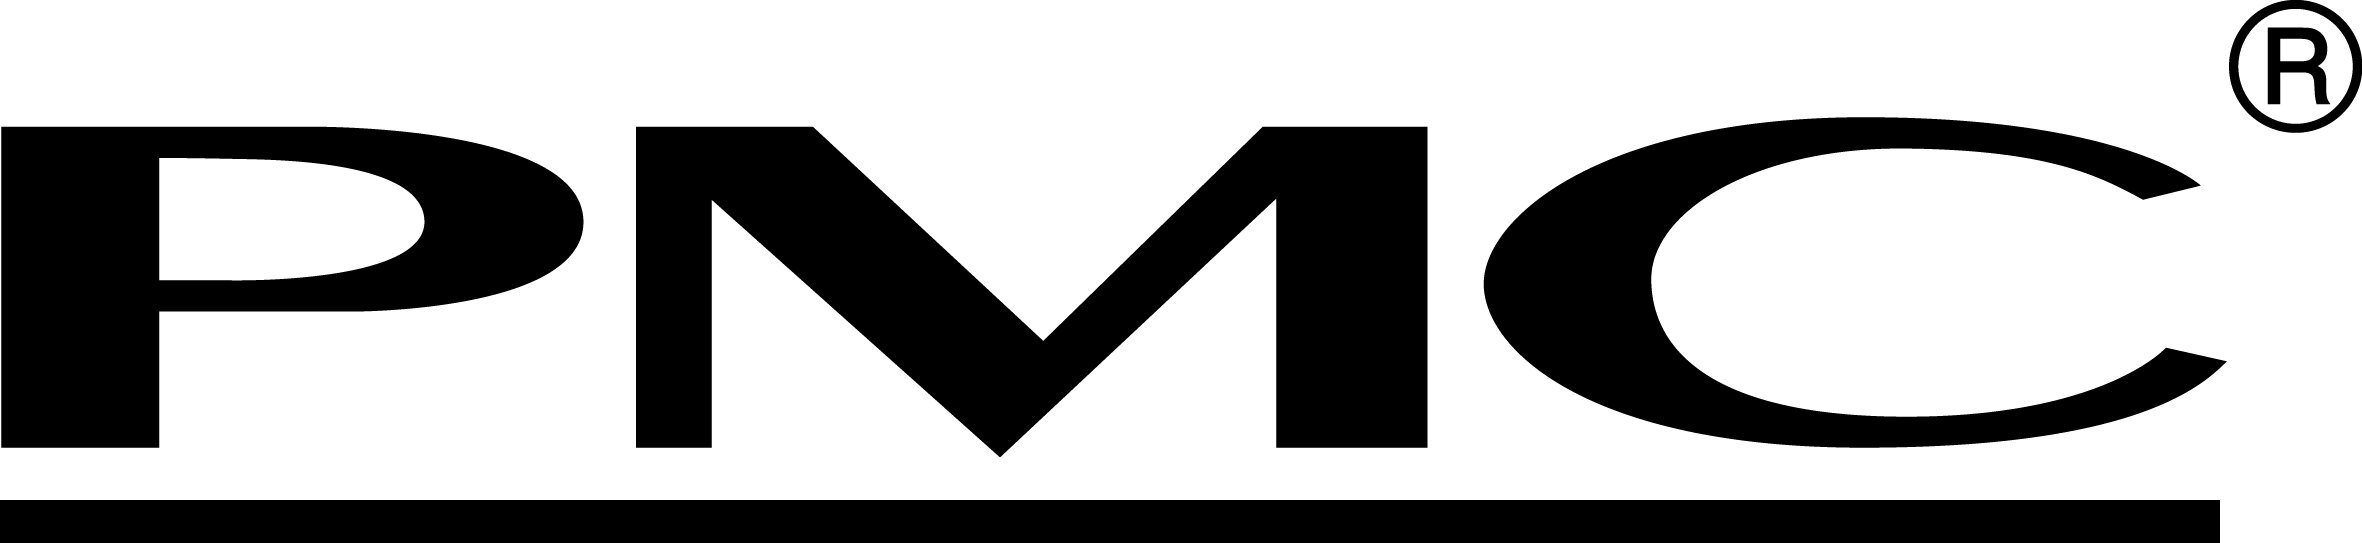 pmc-logo-no-dots.jpg